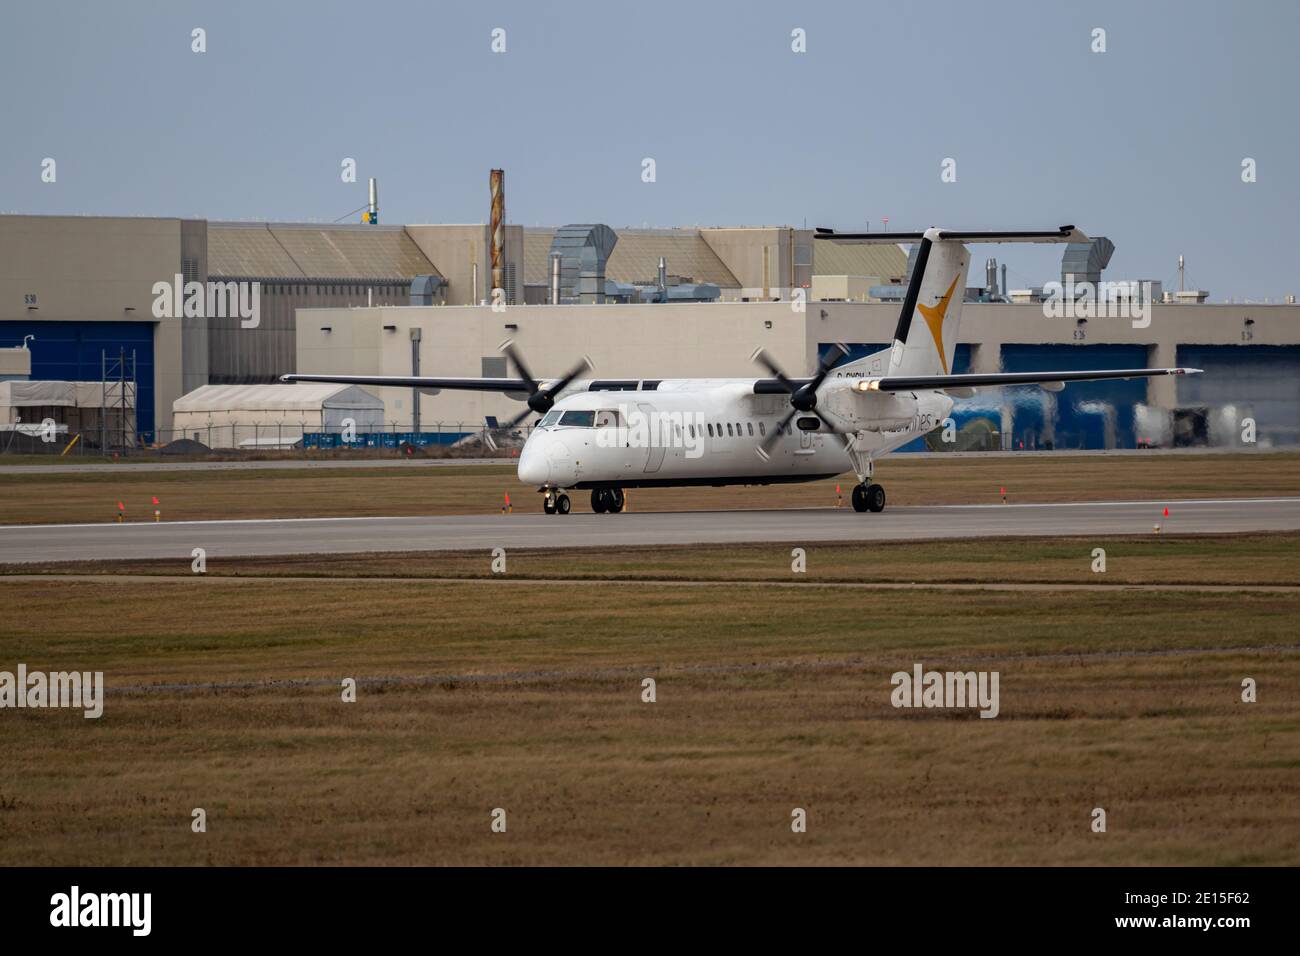 Montreal, Quebec/ Canada - 11/29/2020 : PAL Dash-8 landing at Montreals airport. Stock Photo